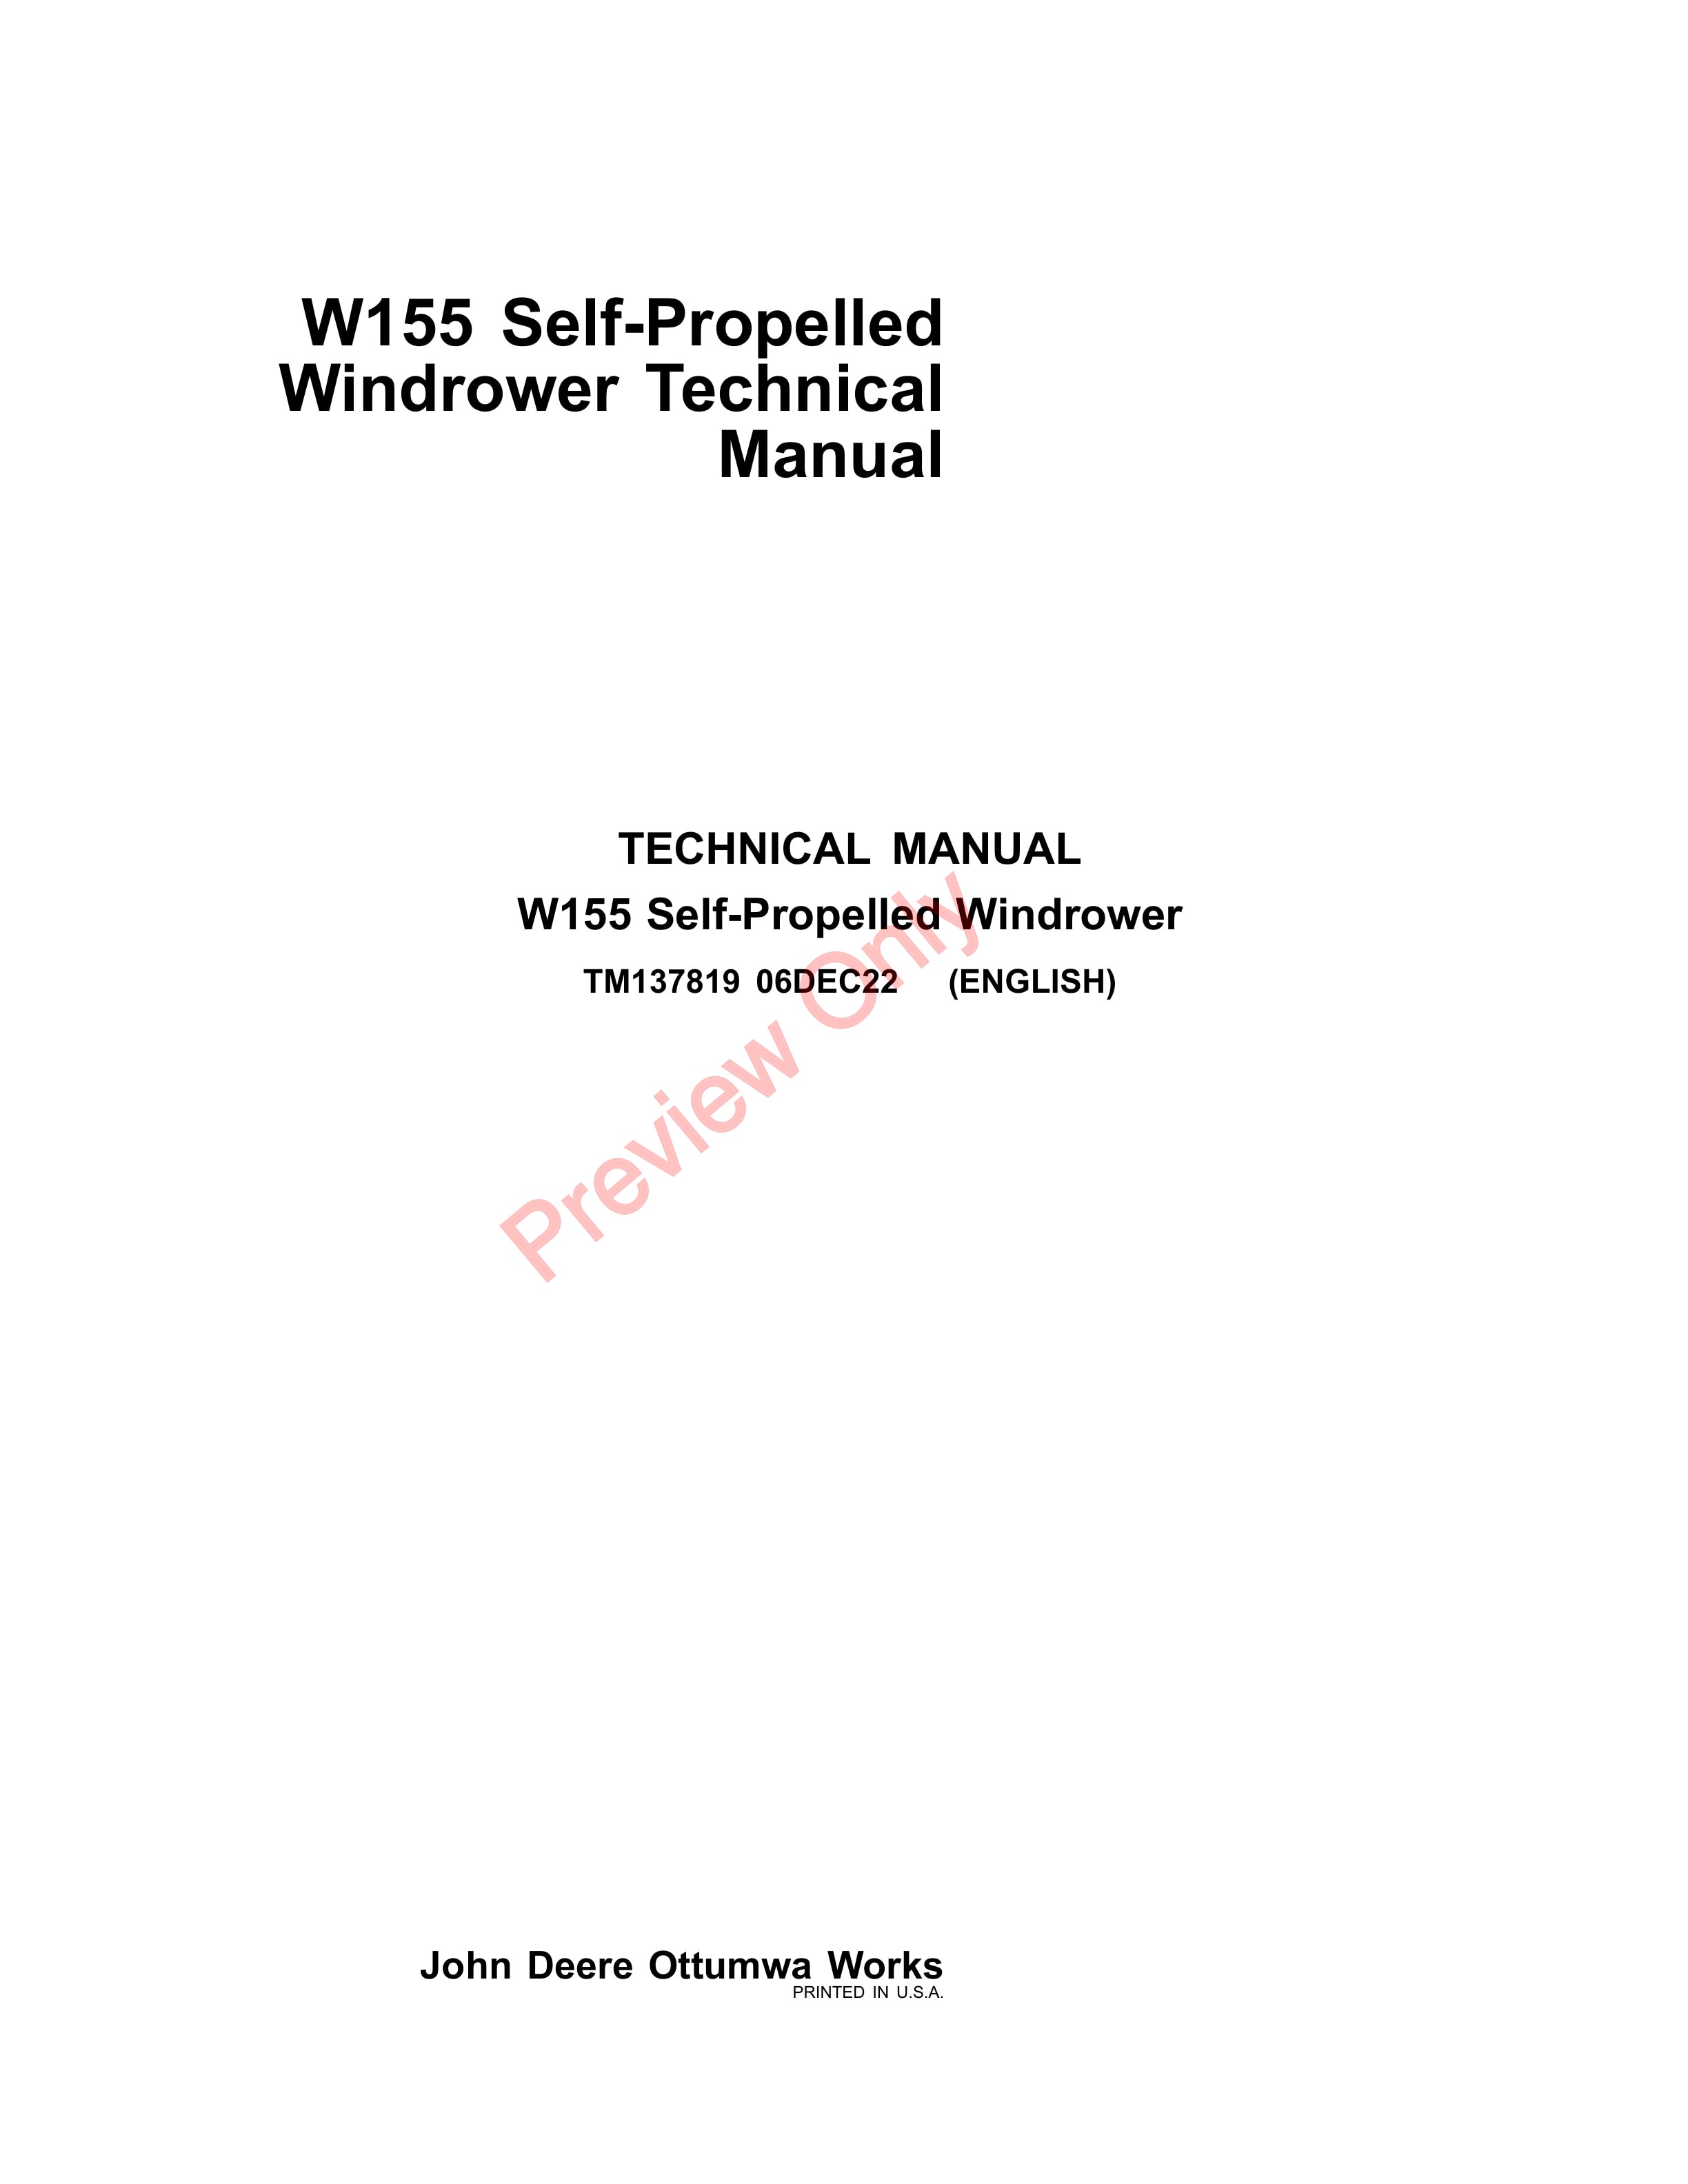 John Deere W155 Self Propelled Windrower Technical Manual TM137819 06DEC22 1